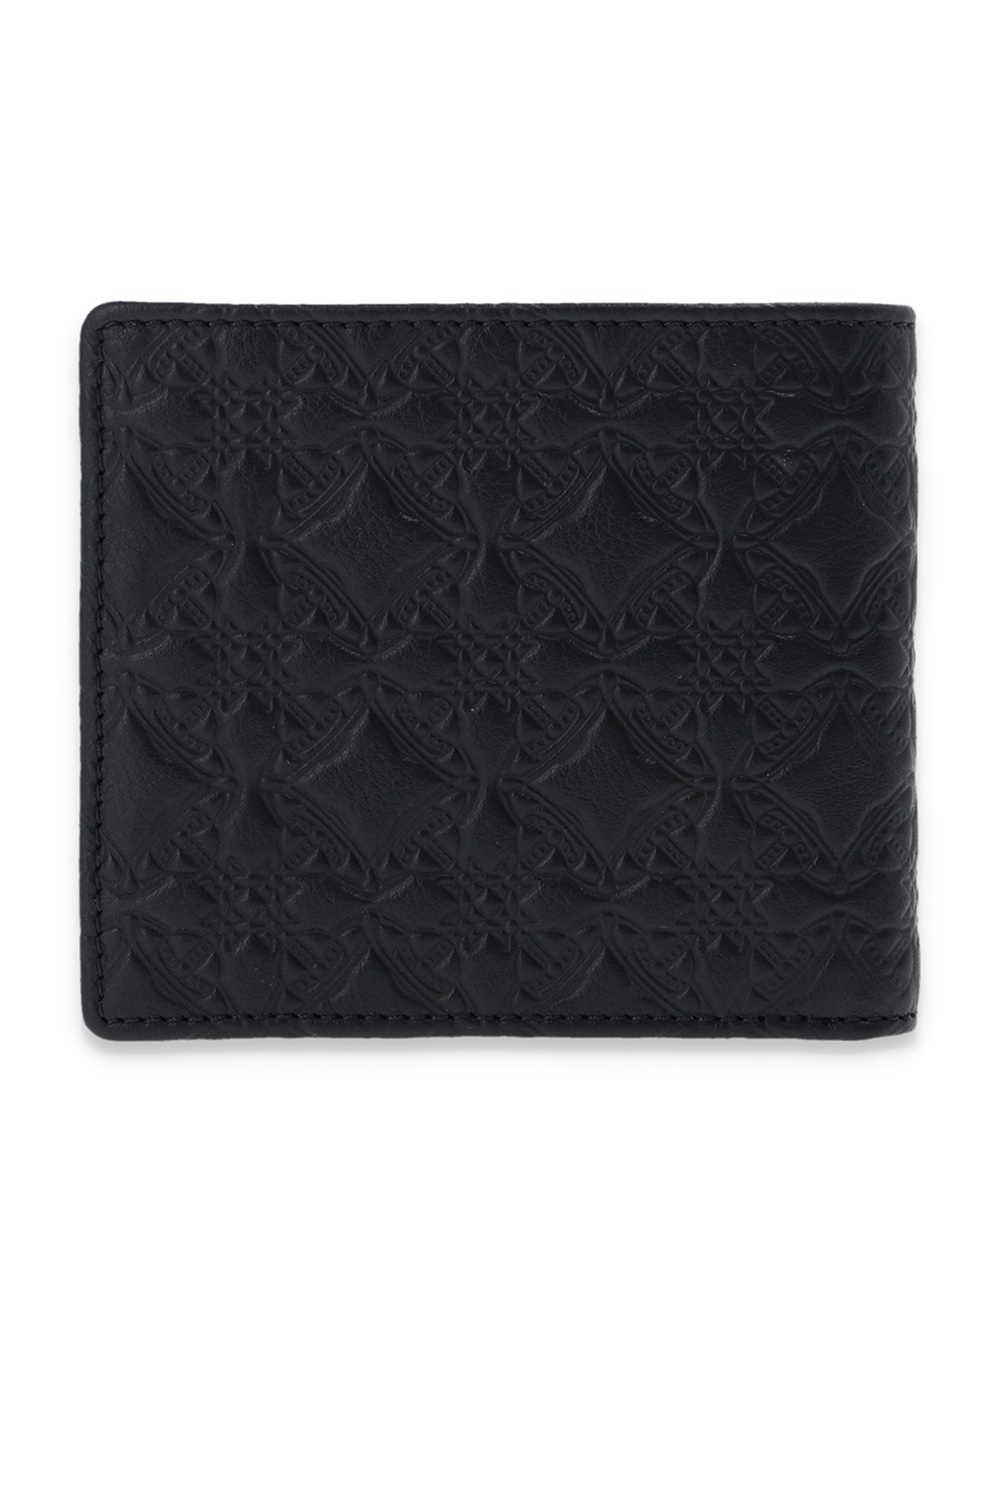 Vivienne Westwood ‘Geroge’ leather wallet with logo